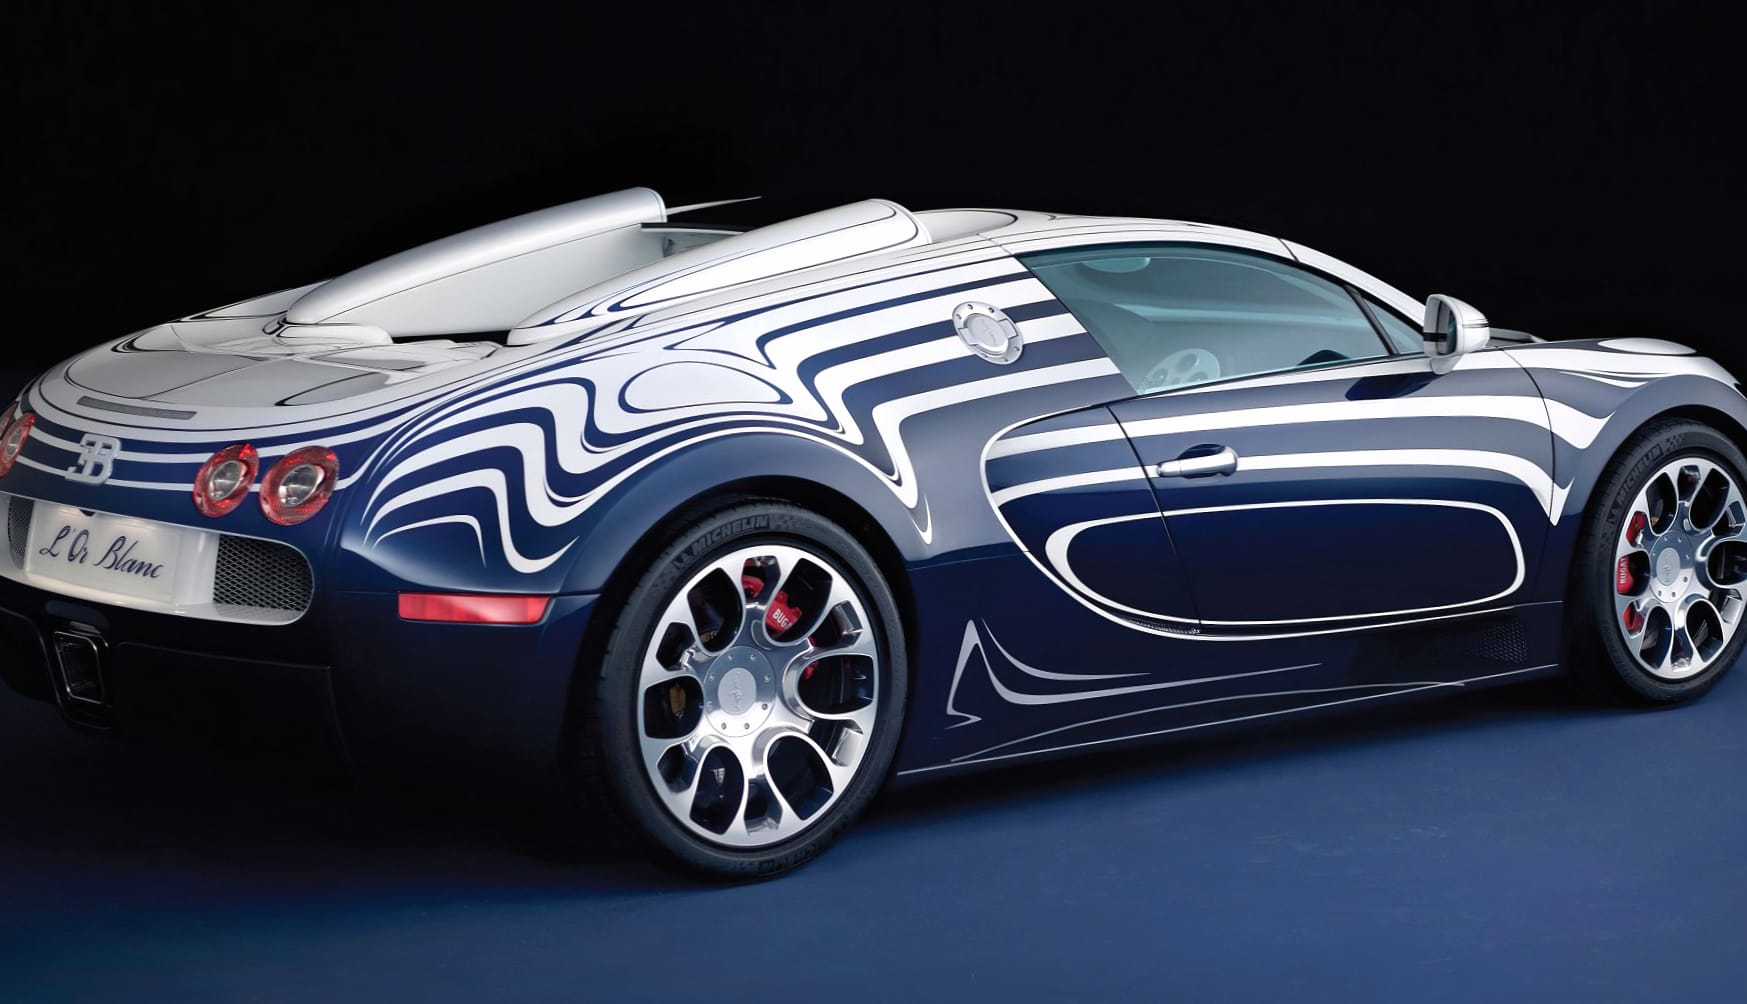 Bugatti Veyron Grand Sport LOr Blanc at 1600 x 1200 size wallpapers HD quality